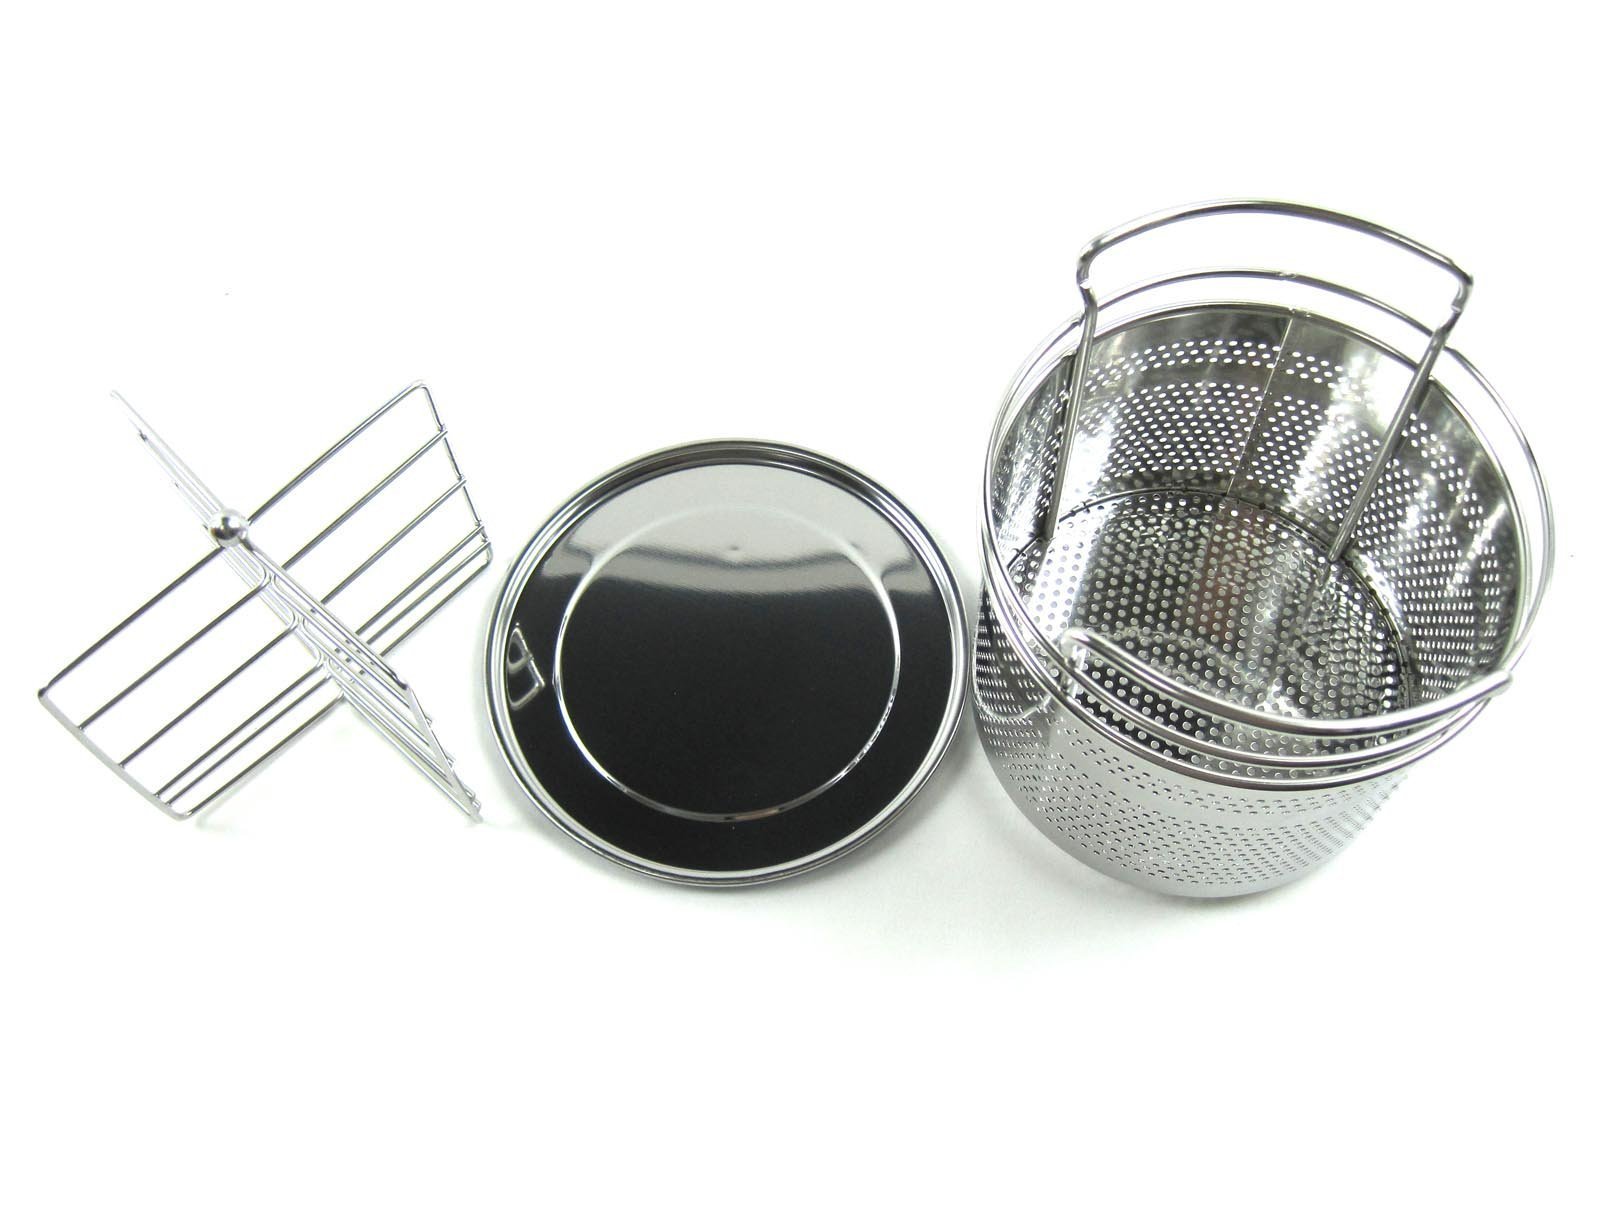 Get hanil circle stainless spoon holder cutlery organizer utensils storage silver